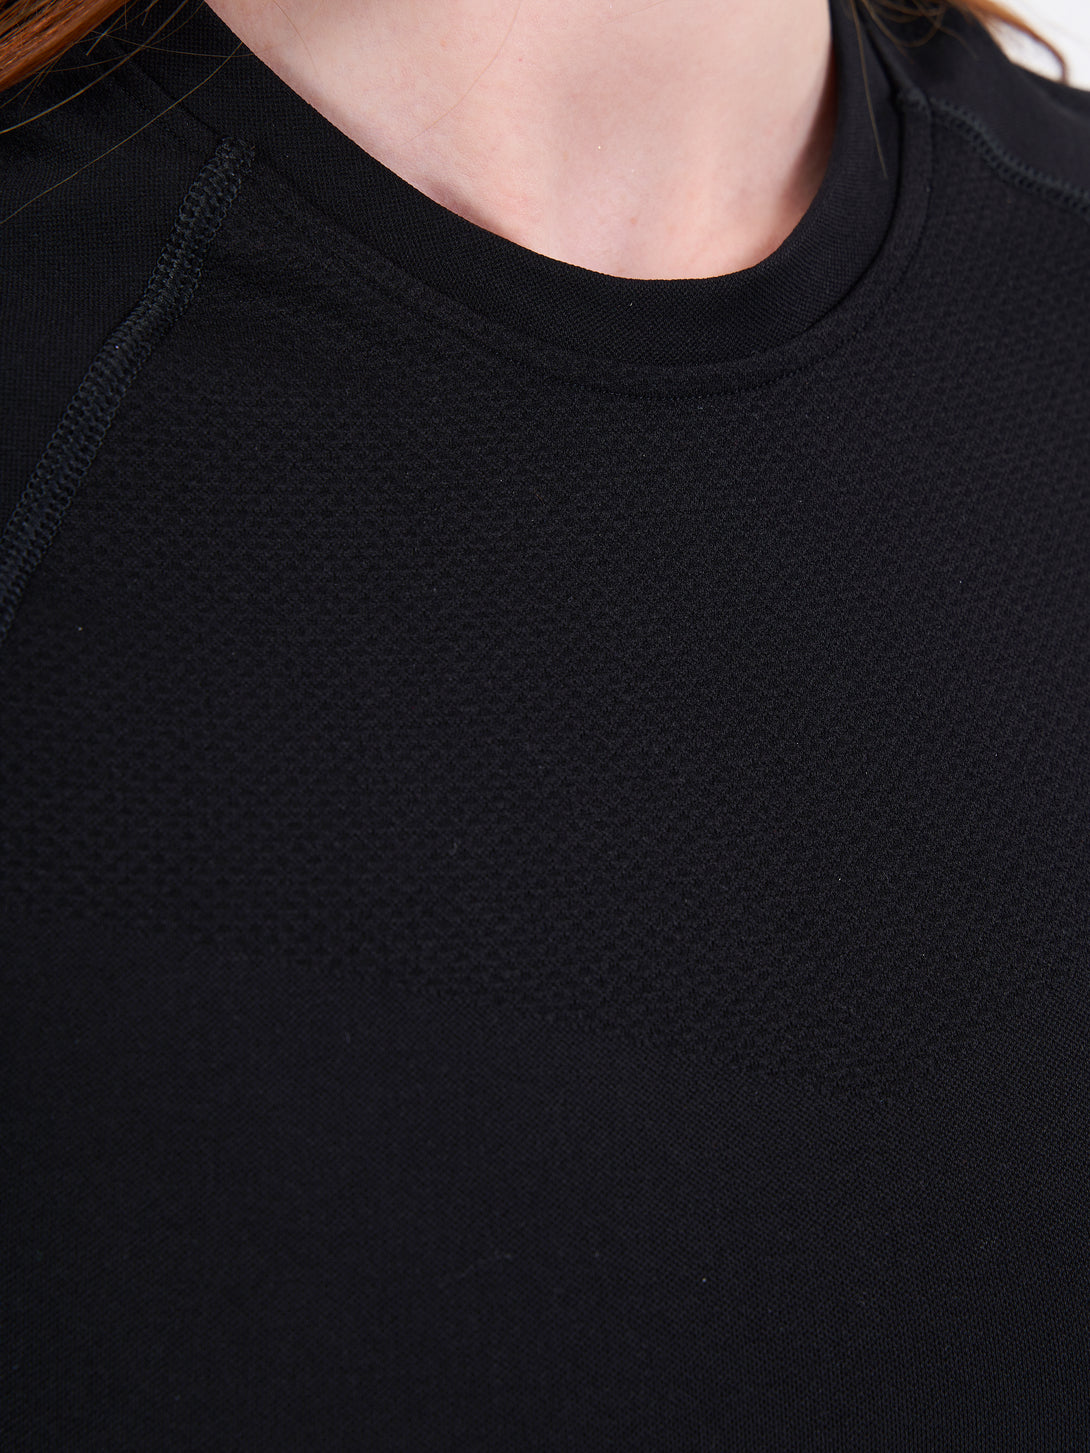 A Women Wearing Deep Black Color Zen Confidence Seamless Compressive T-Shirt. Sculpted Silhouette